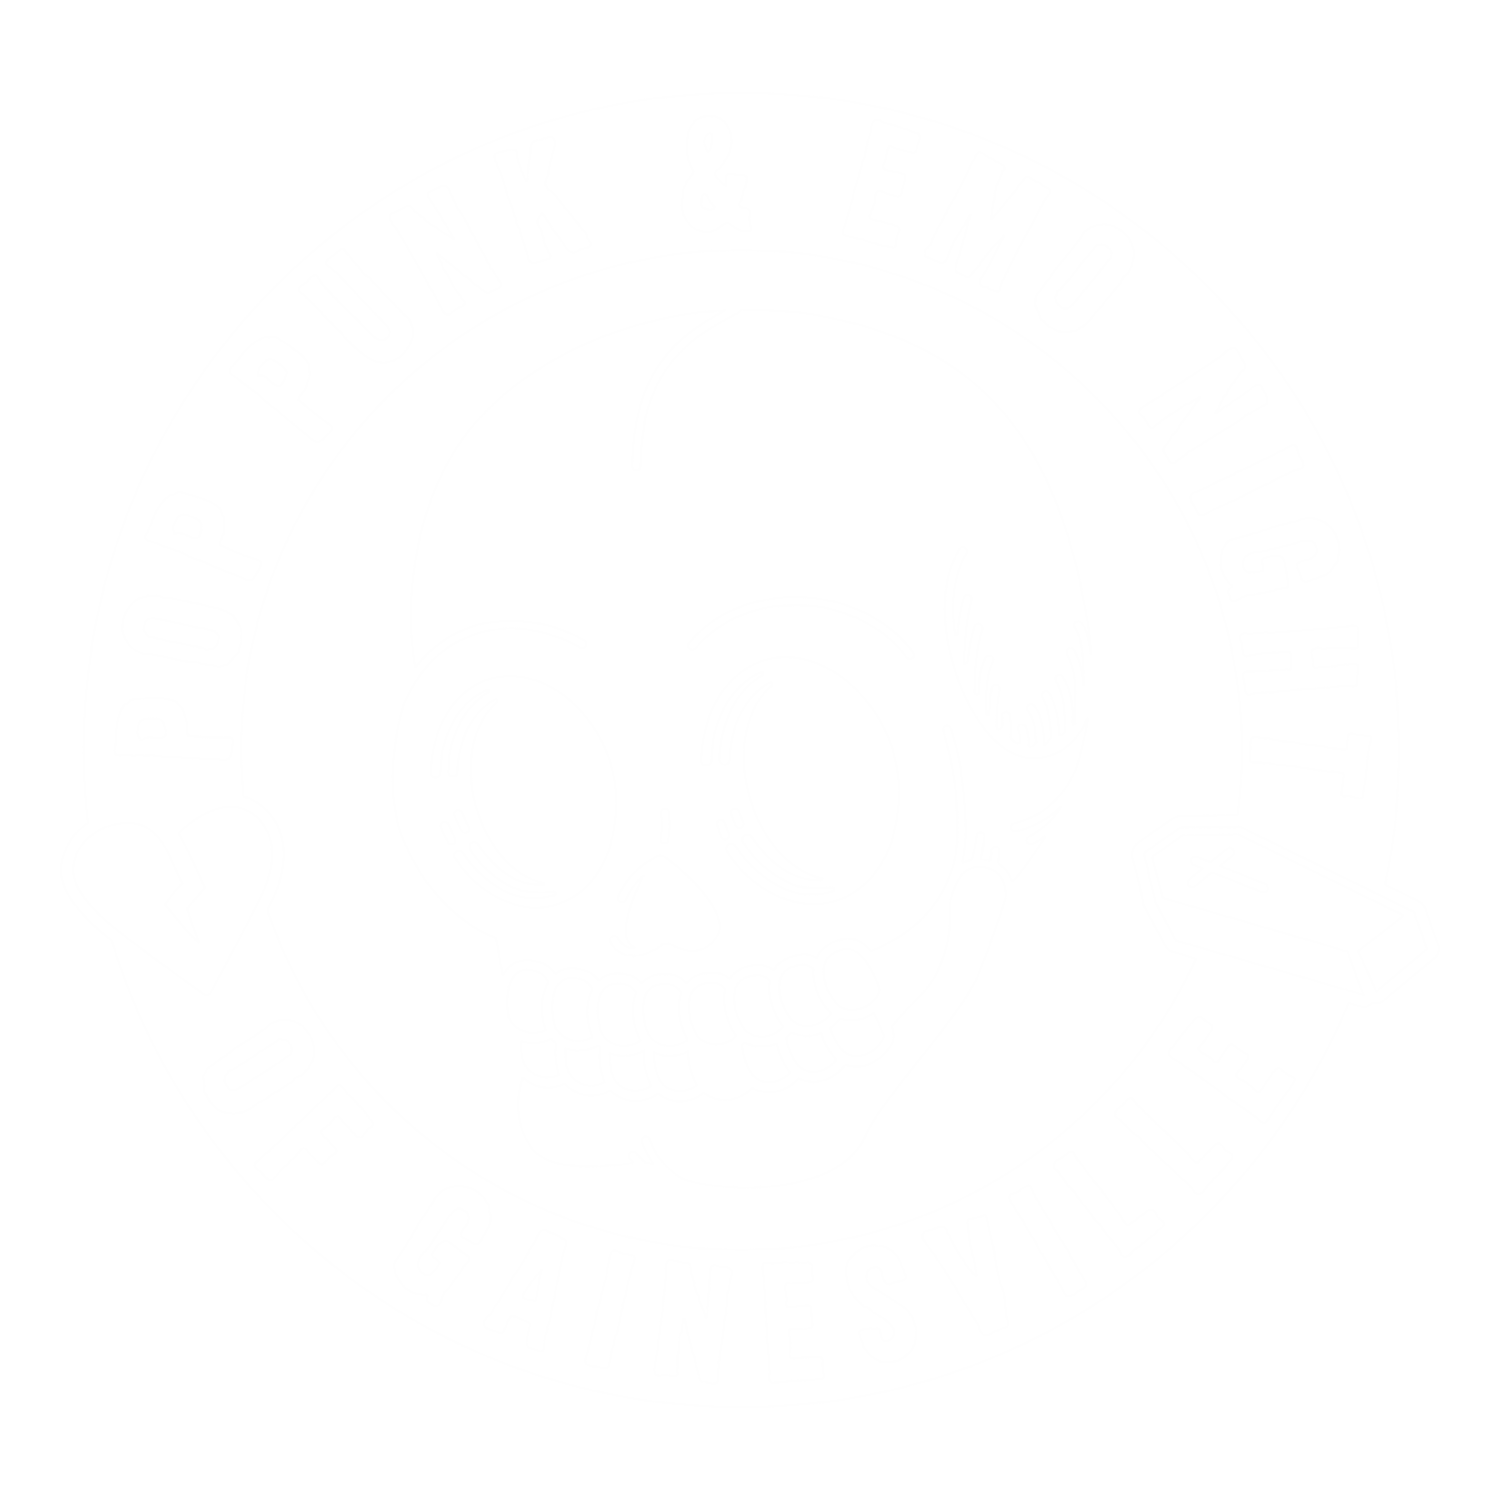 POP PUNK &amp; EMO NIGHT OF GAINESVILLE